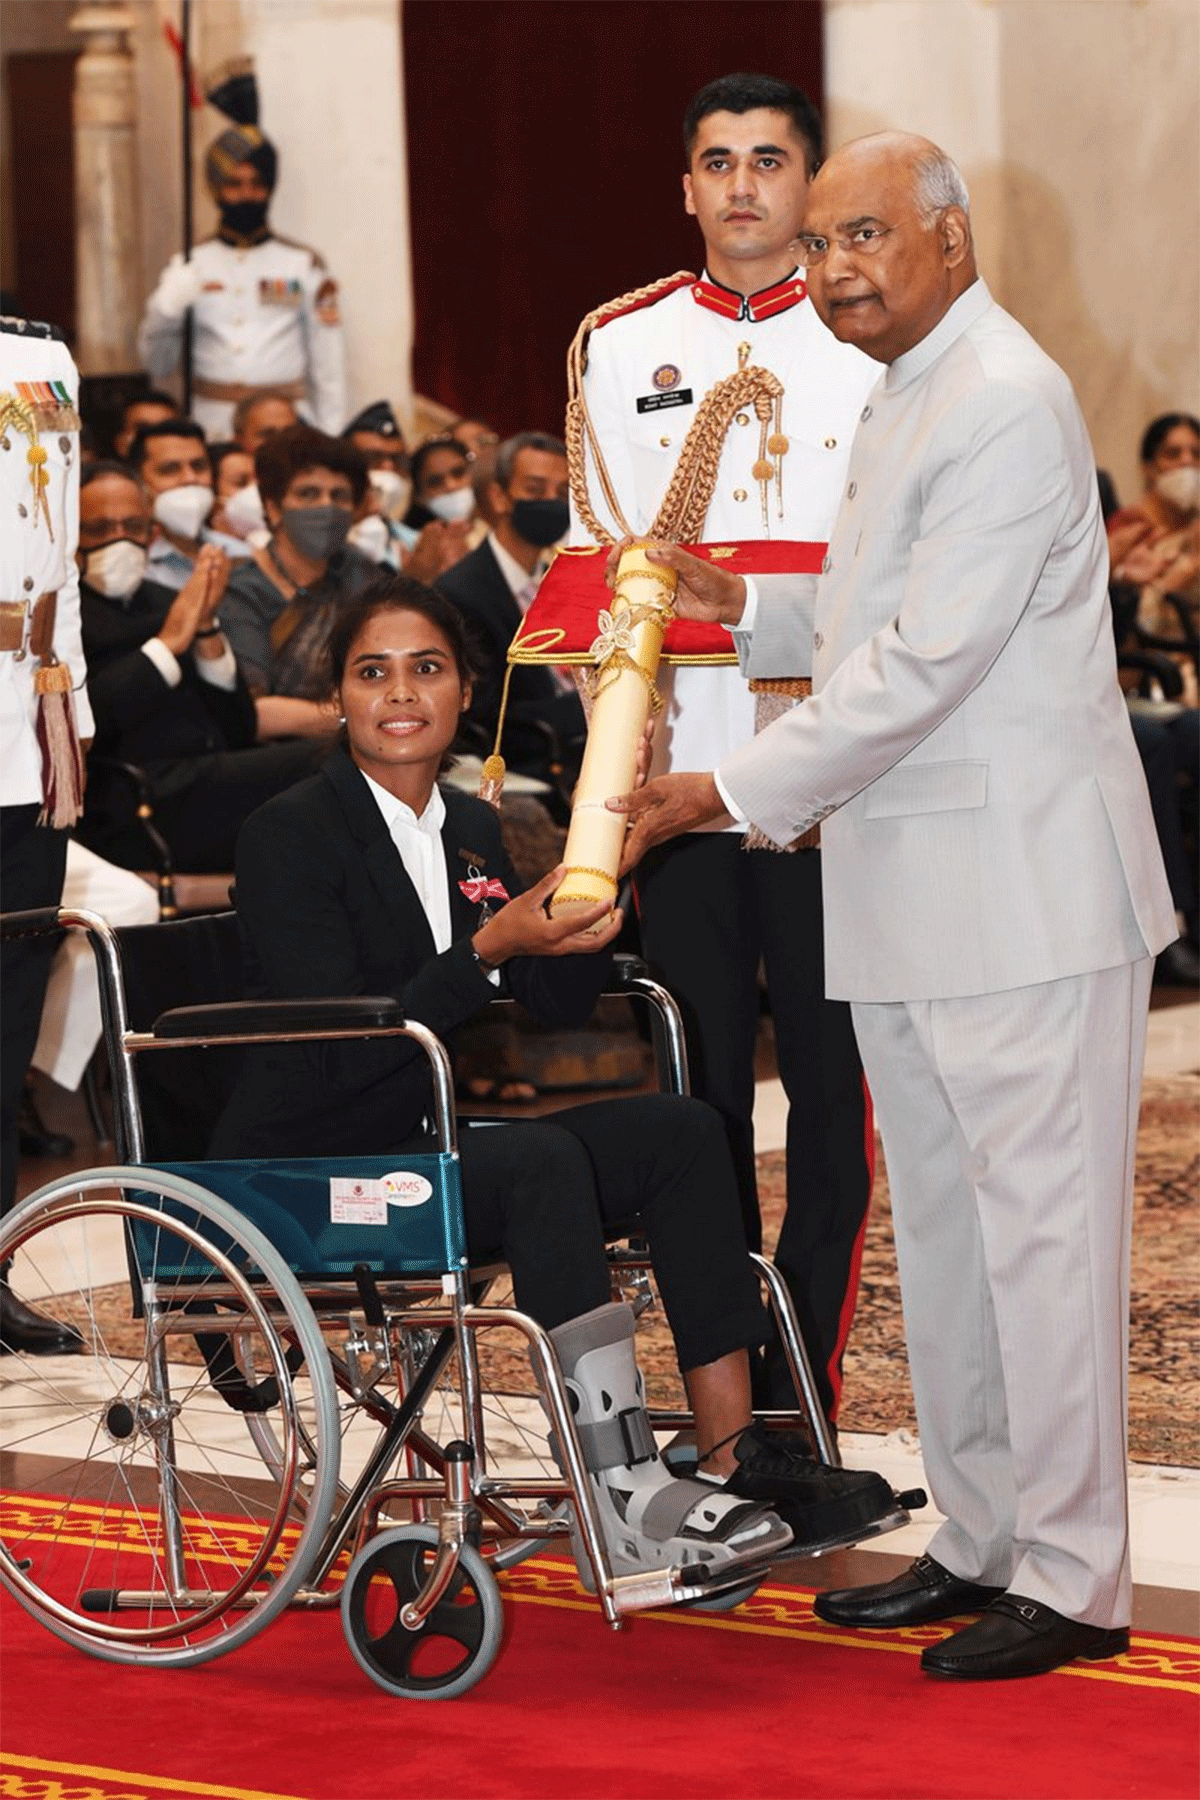 India Hockey player Vandana Kataria gets the Padma Shri from President Ram Nath Kovind